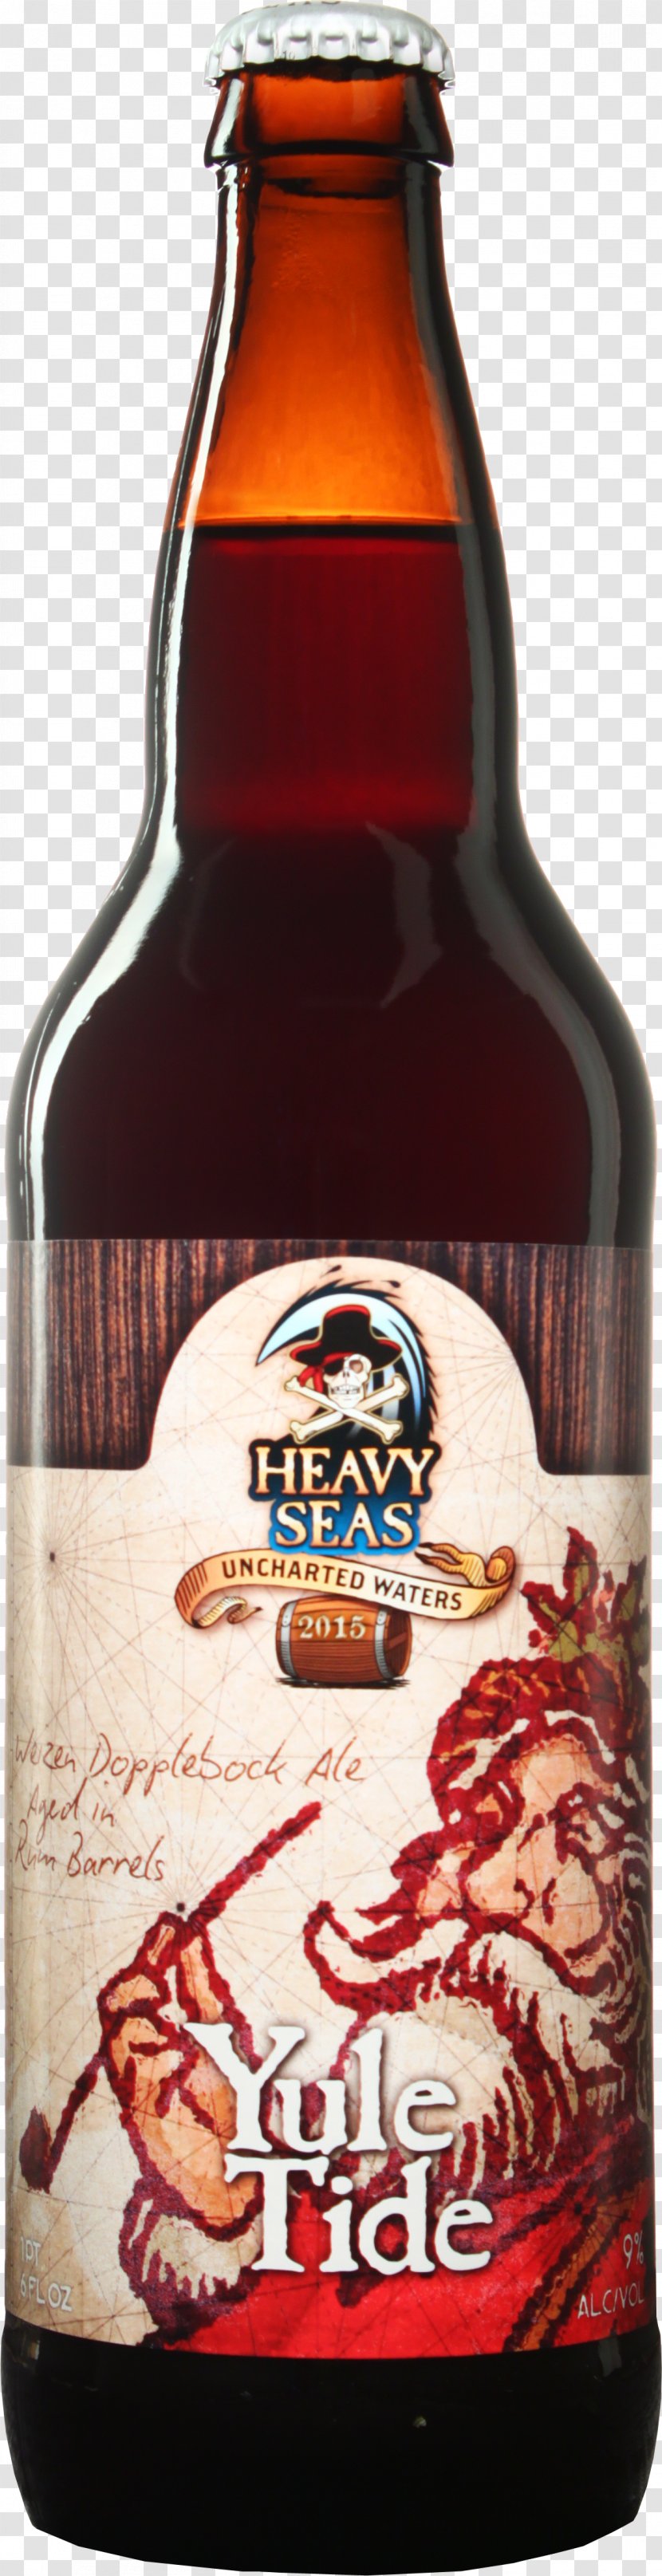 Ale Heavy Seas Beer Stout Bottle - Drink Transparent PNG